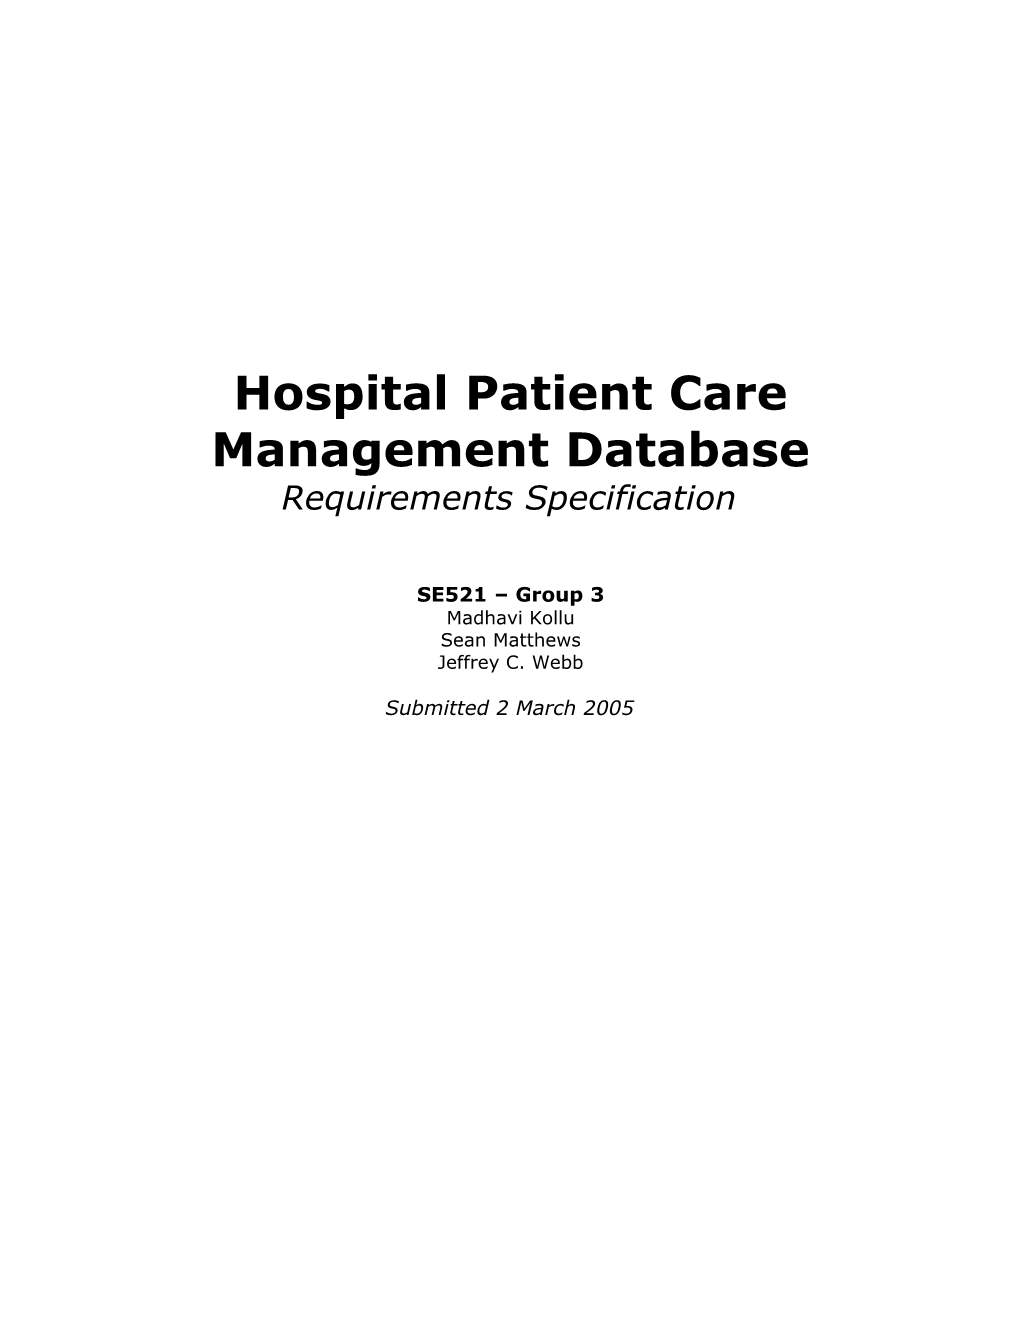 Hospital Patient Care Management Database